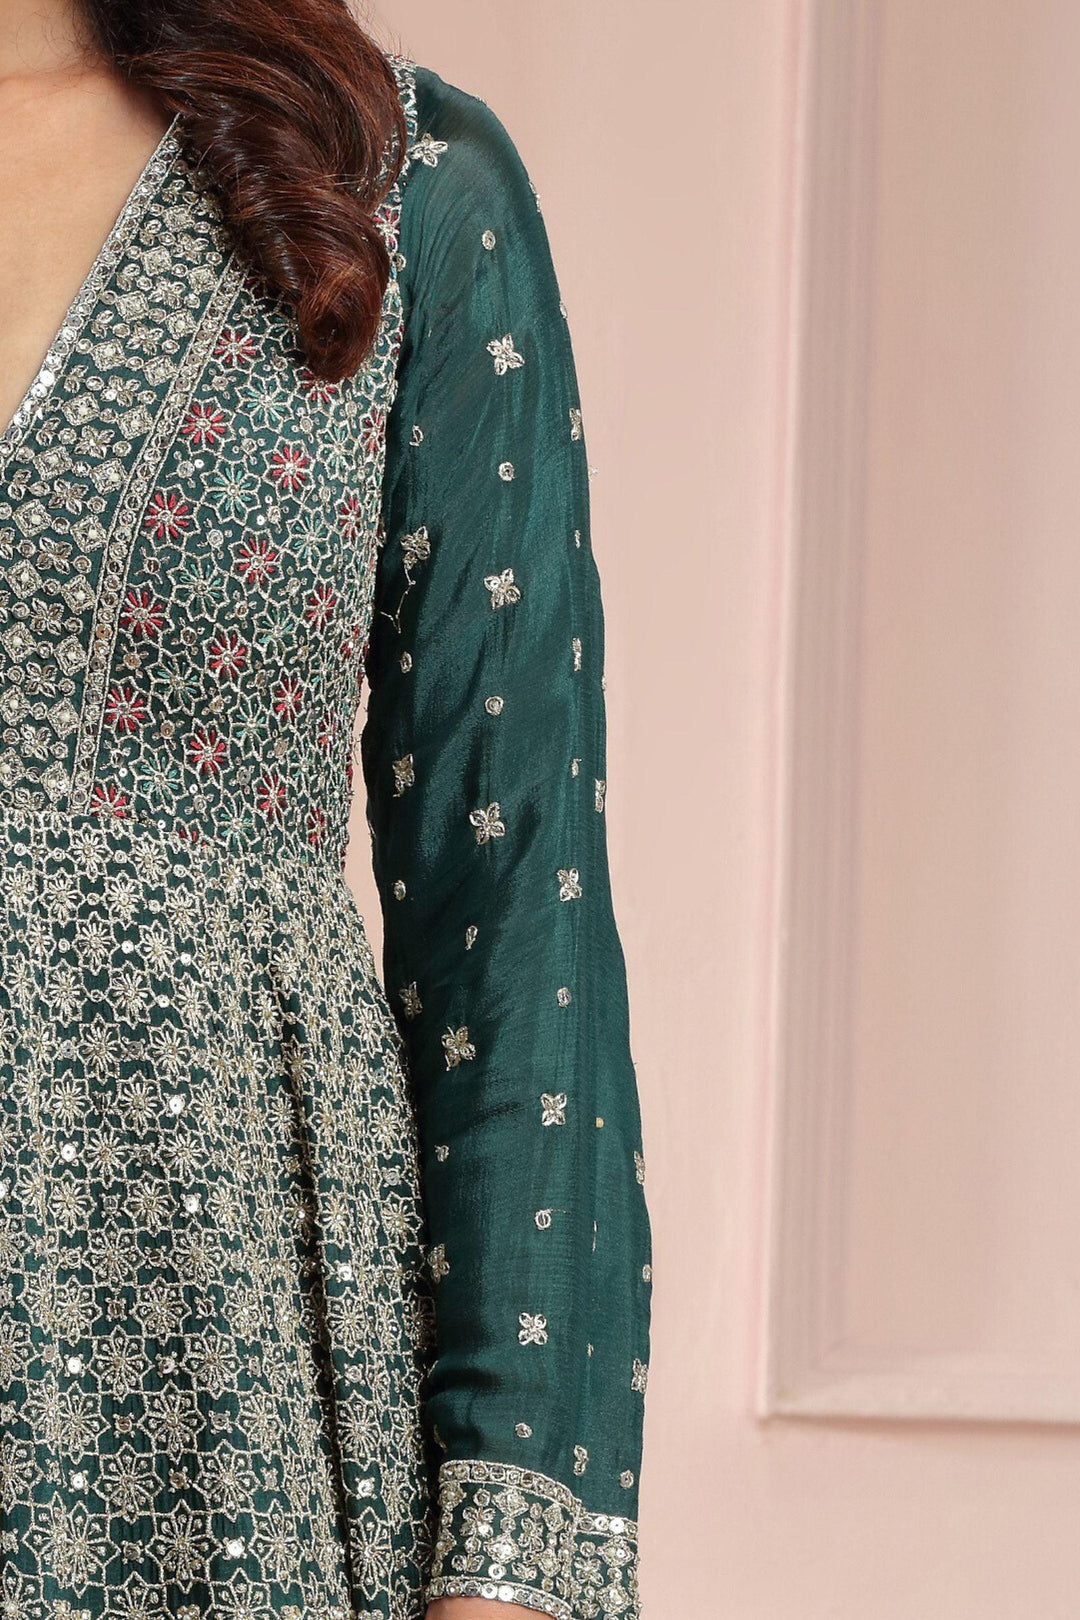 Peacock Blue Stone, Zari, Sequins and Thread work Floor Length Anarkali Gown - Seasons Chennai